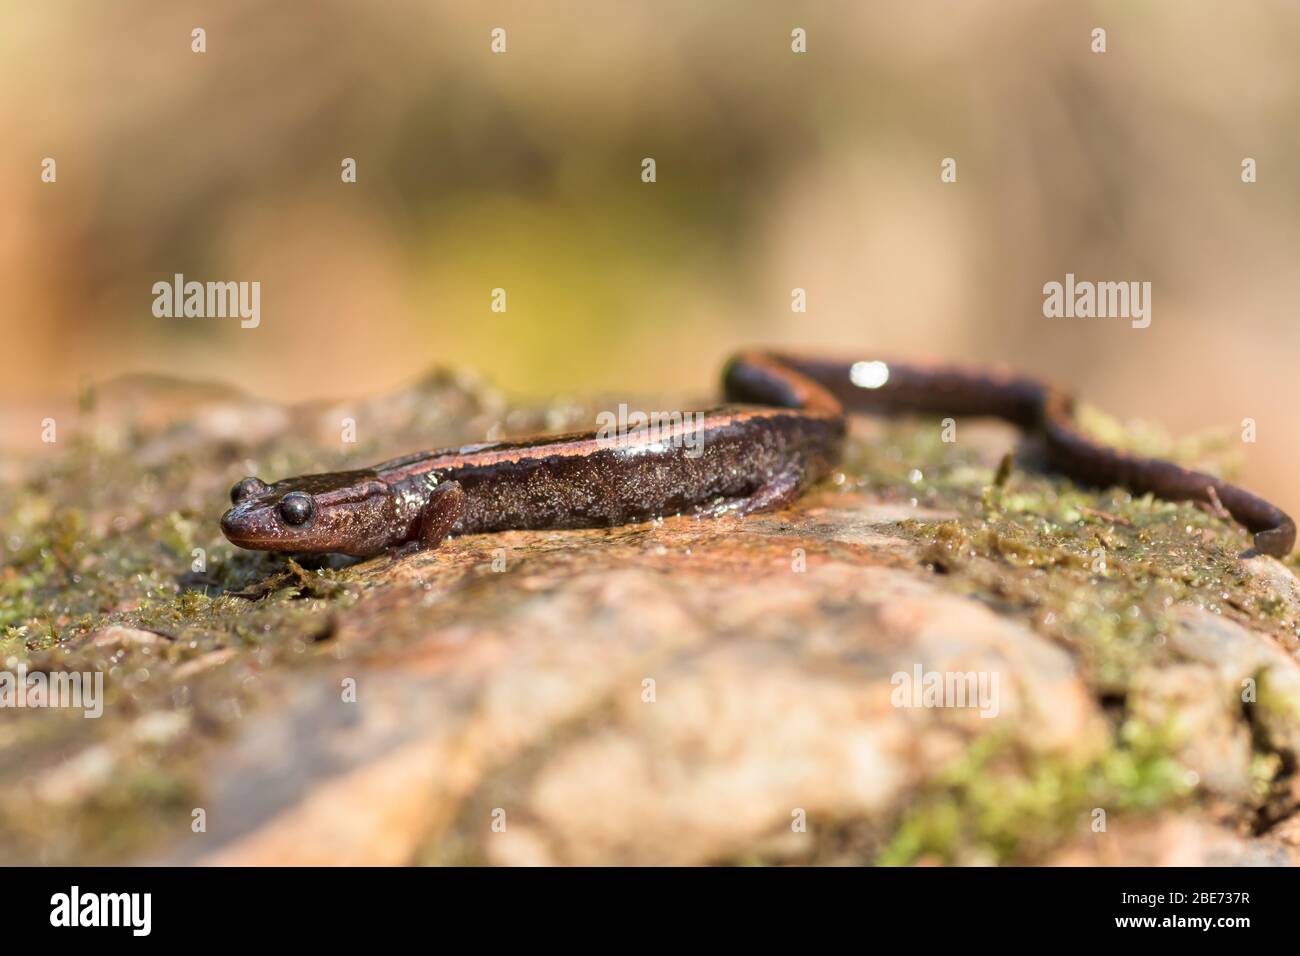 Golden-striped salamander (chioglossa lusitanica), a vulnerable amphibian endemic from Iberian Peninsula. Stock Photo